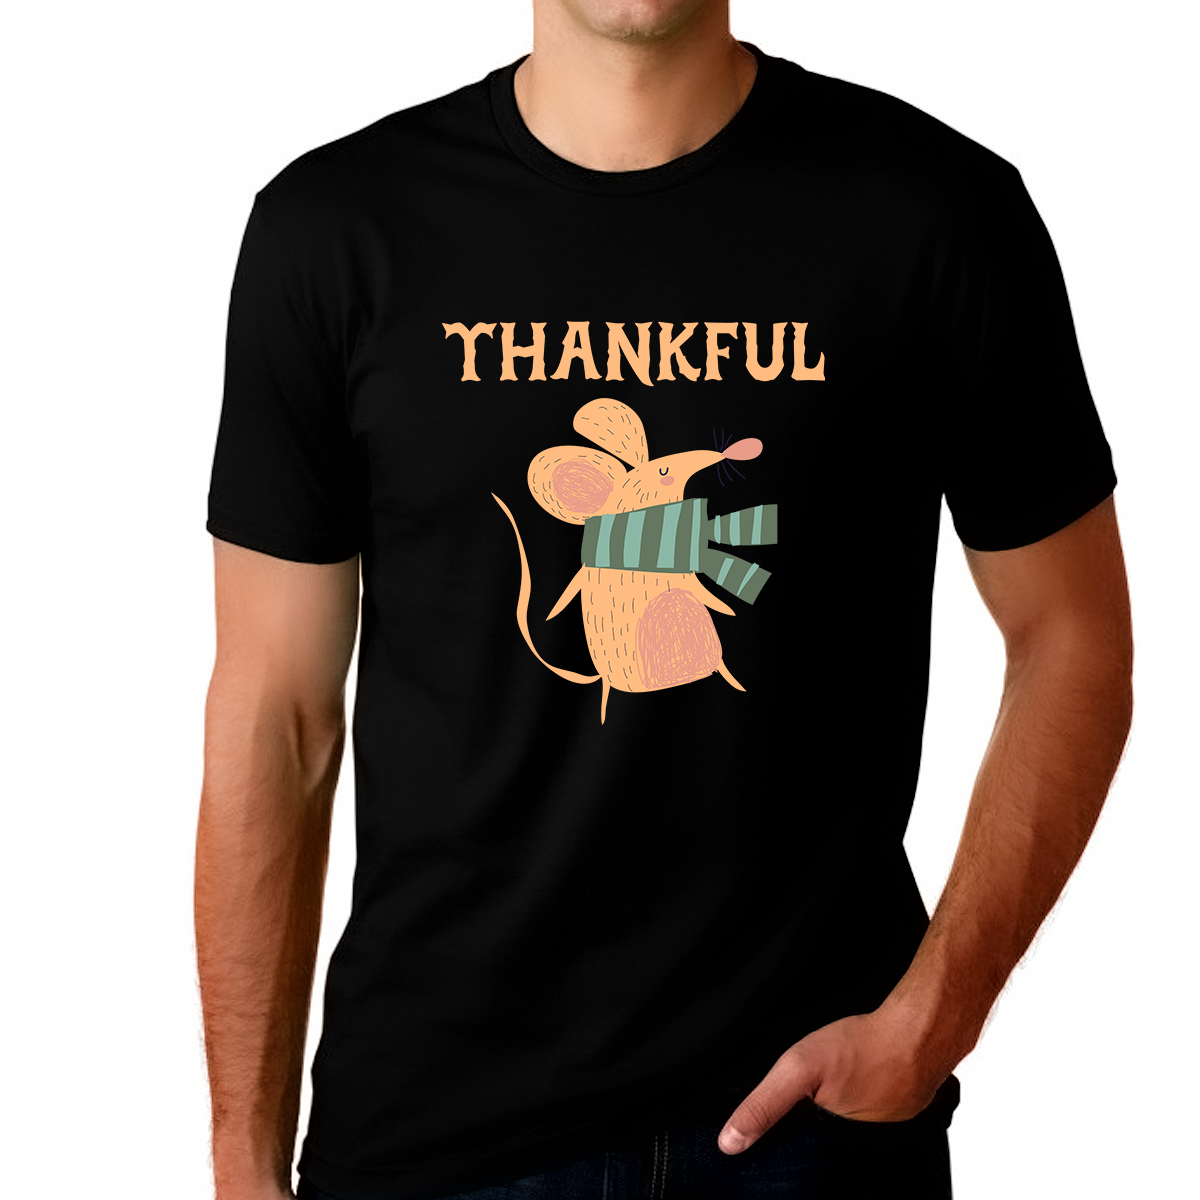 Mens Thanksgiving Shirt Mouse Shirt Funny Thanksgiving Shirts Mens Fall Shirts Thankful Shirts for Men